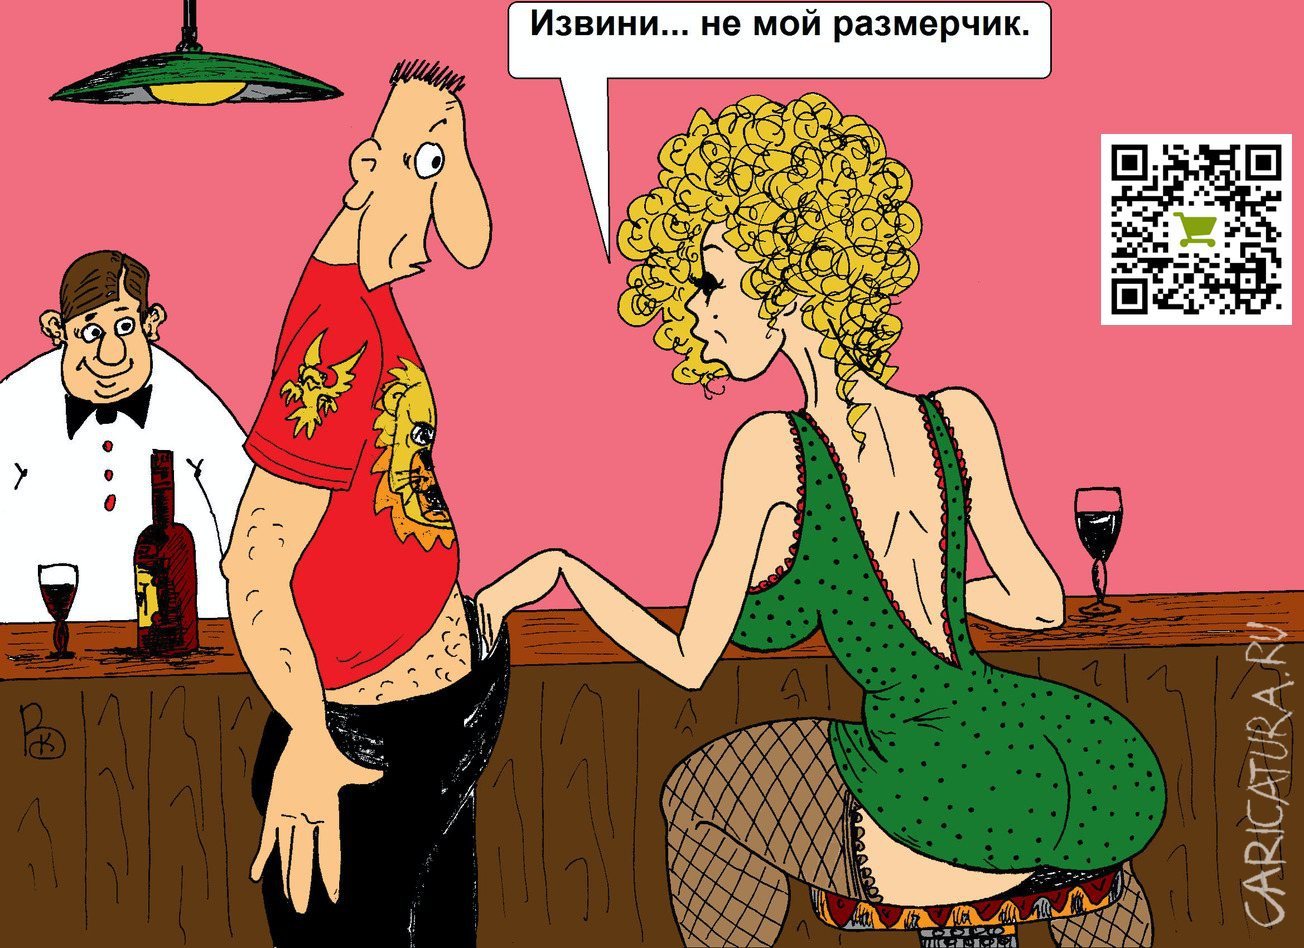 Карикатура "Размерчик", Валерий Каненков